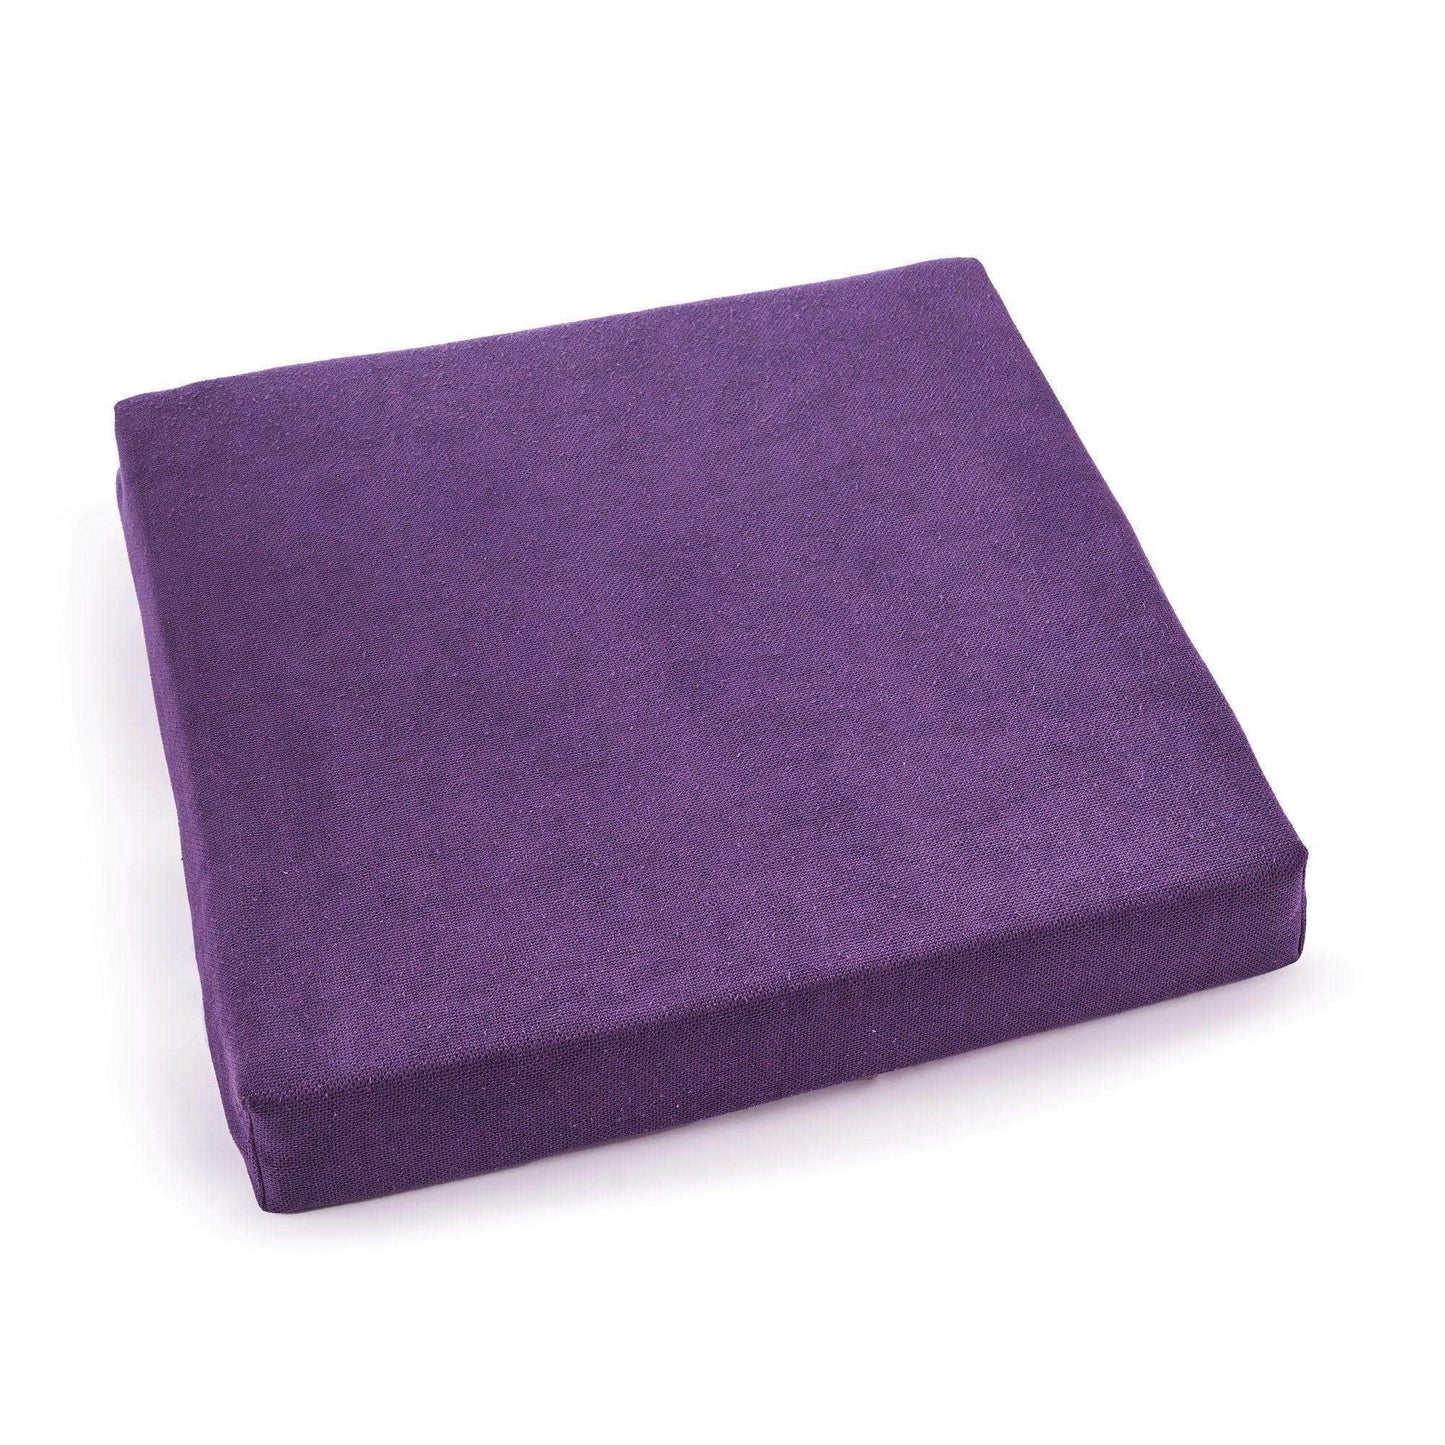 Penguin Group Cushions Mauve Square Sponge Cushion 50×52×8 cm